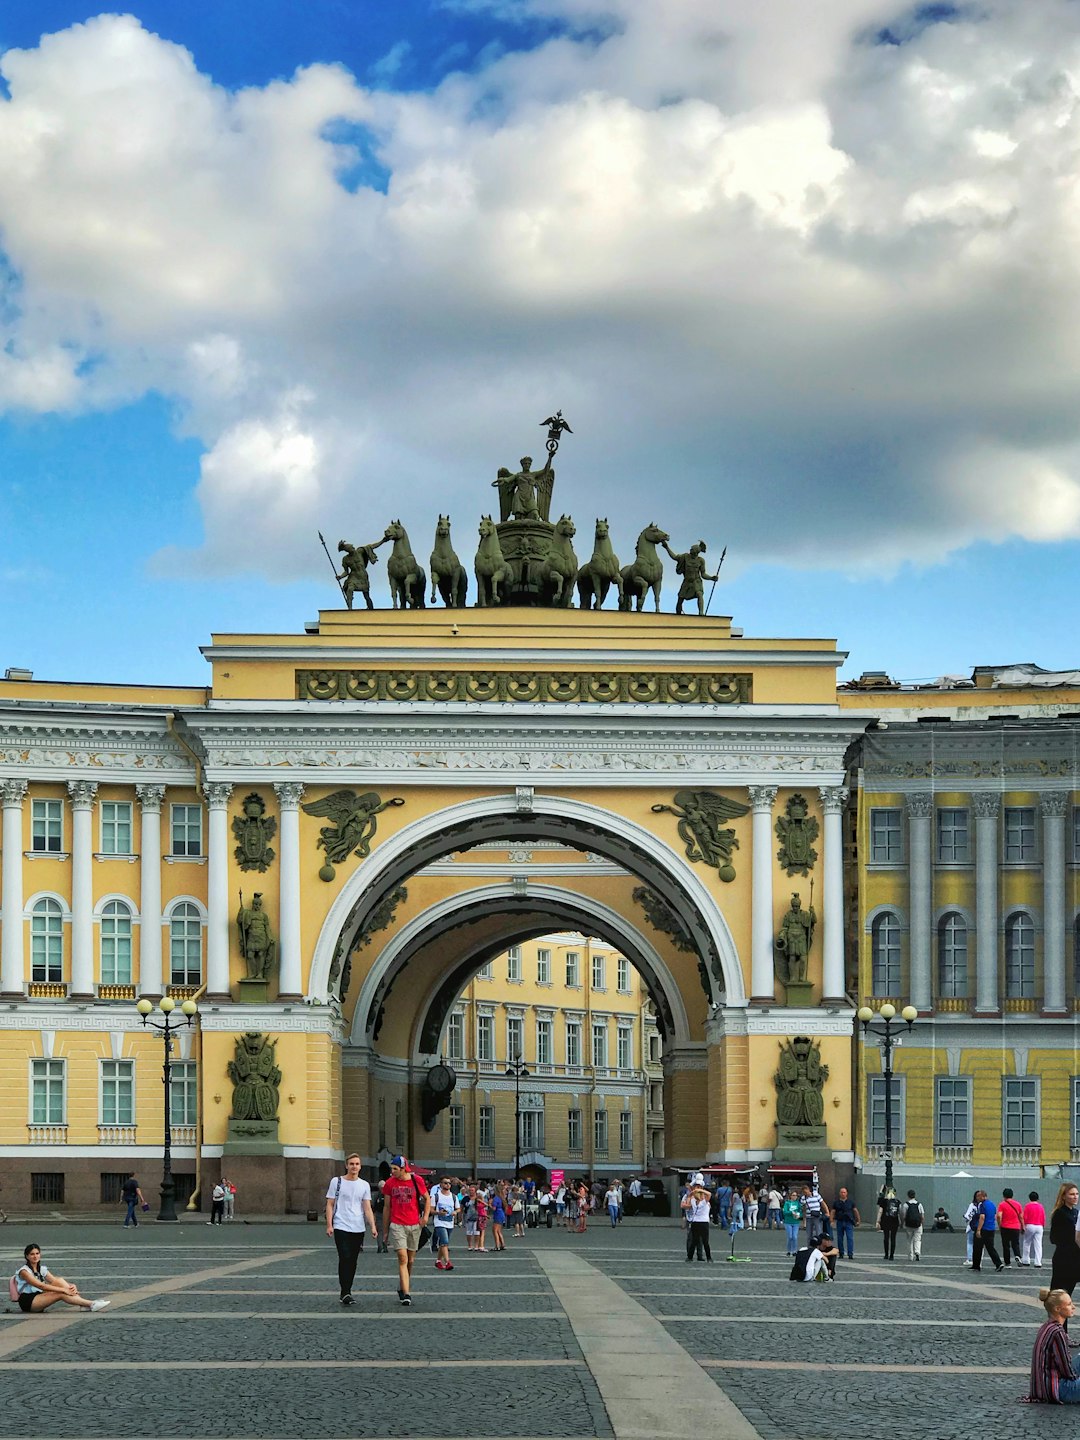 General Staff Building, Saint Petersburg
Original: https://www.dropbox.com/s/navnvua88o1spl1/Vitebsky_Railway_Station.jpg?dl=0